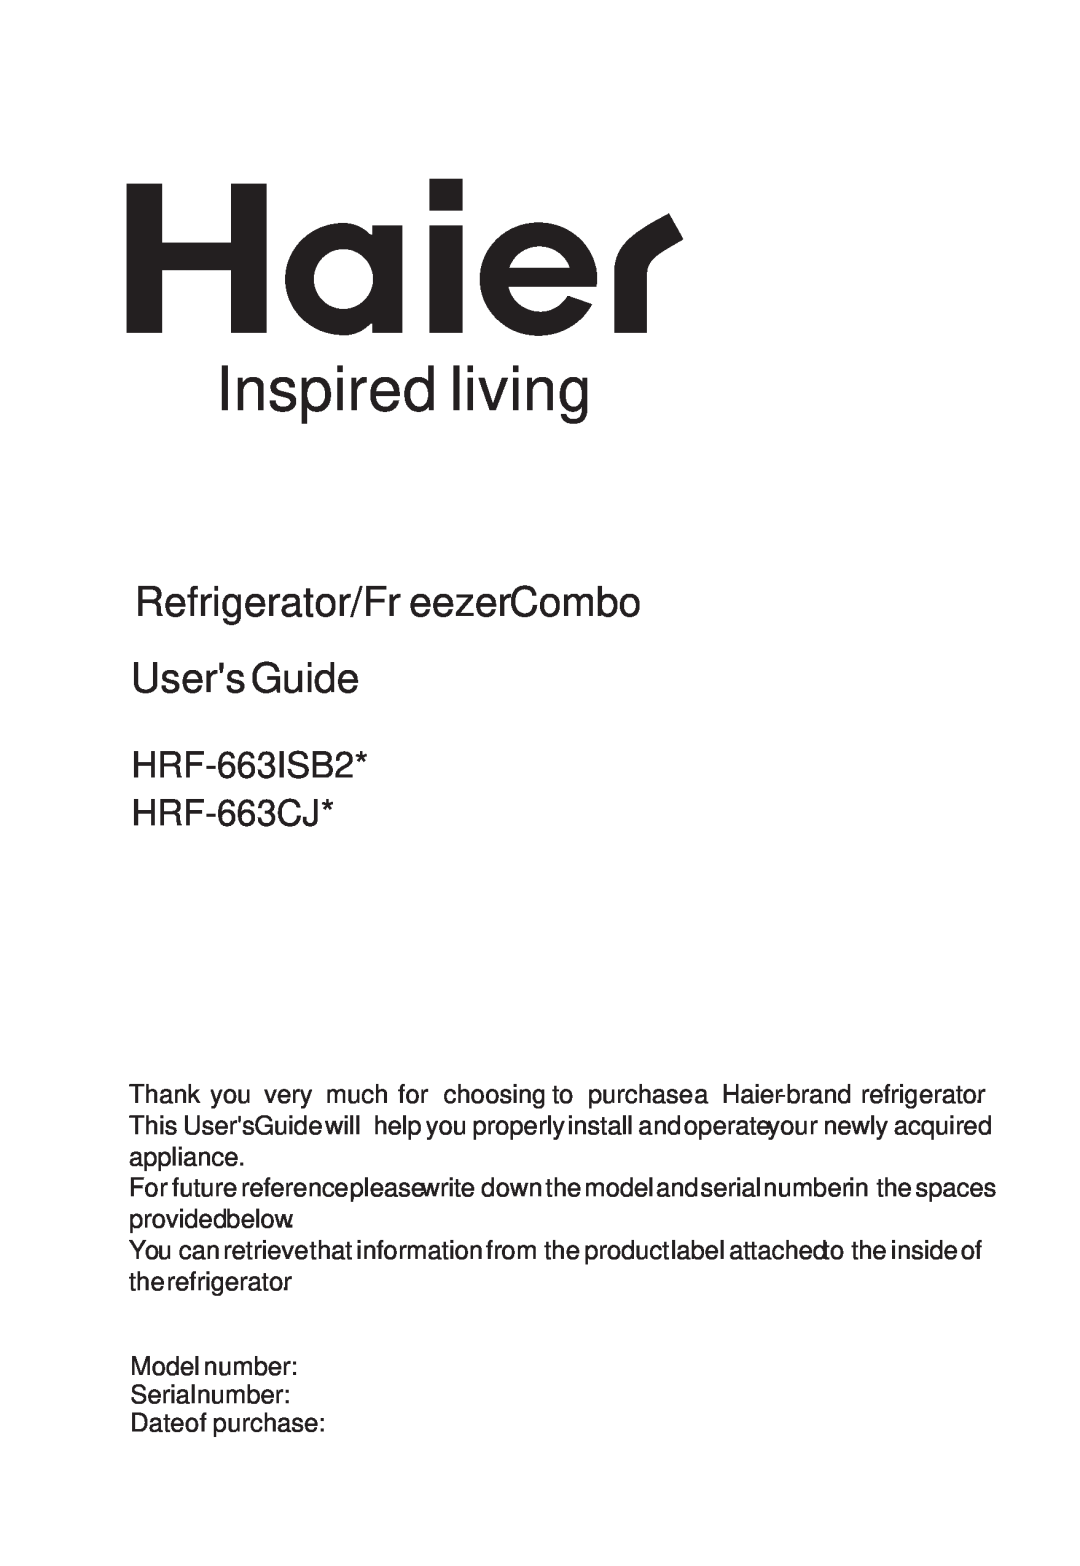 Haier manual Inspired living, Refrigerator/Fr eezerCombo UsersGuide, HRF-663ISB2 HRF-663CJ 